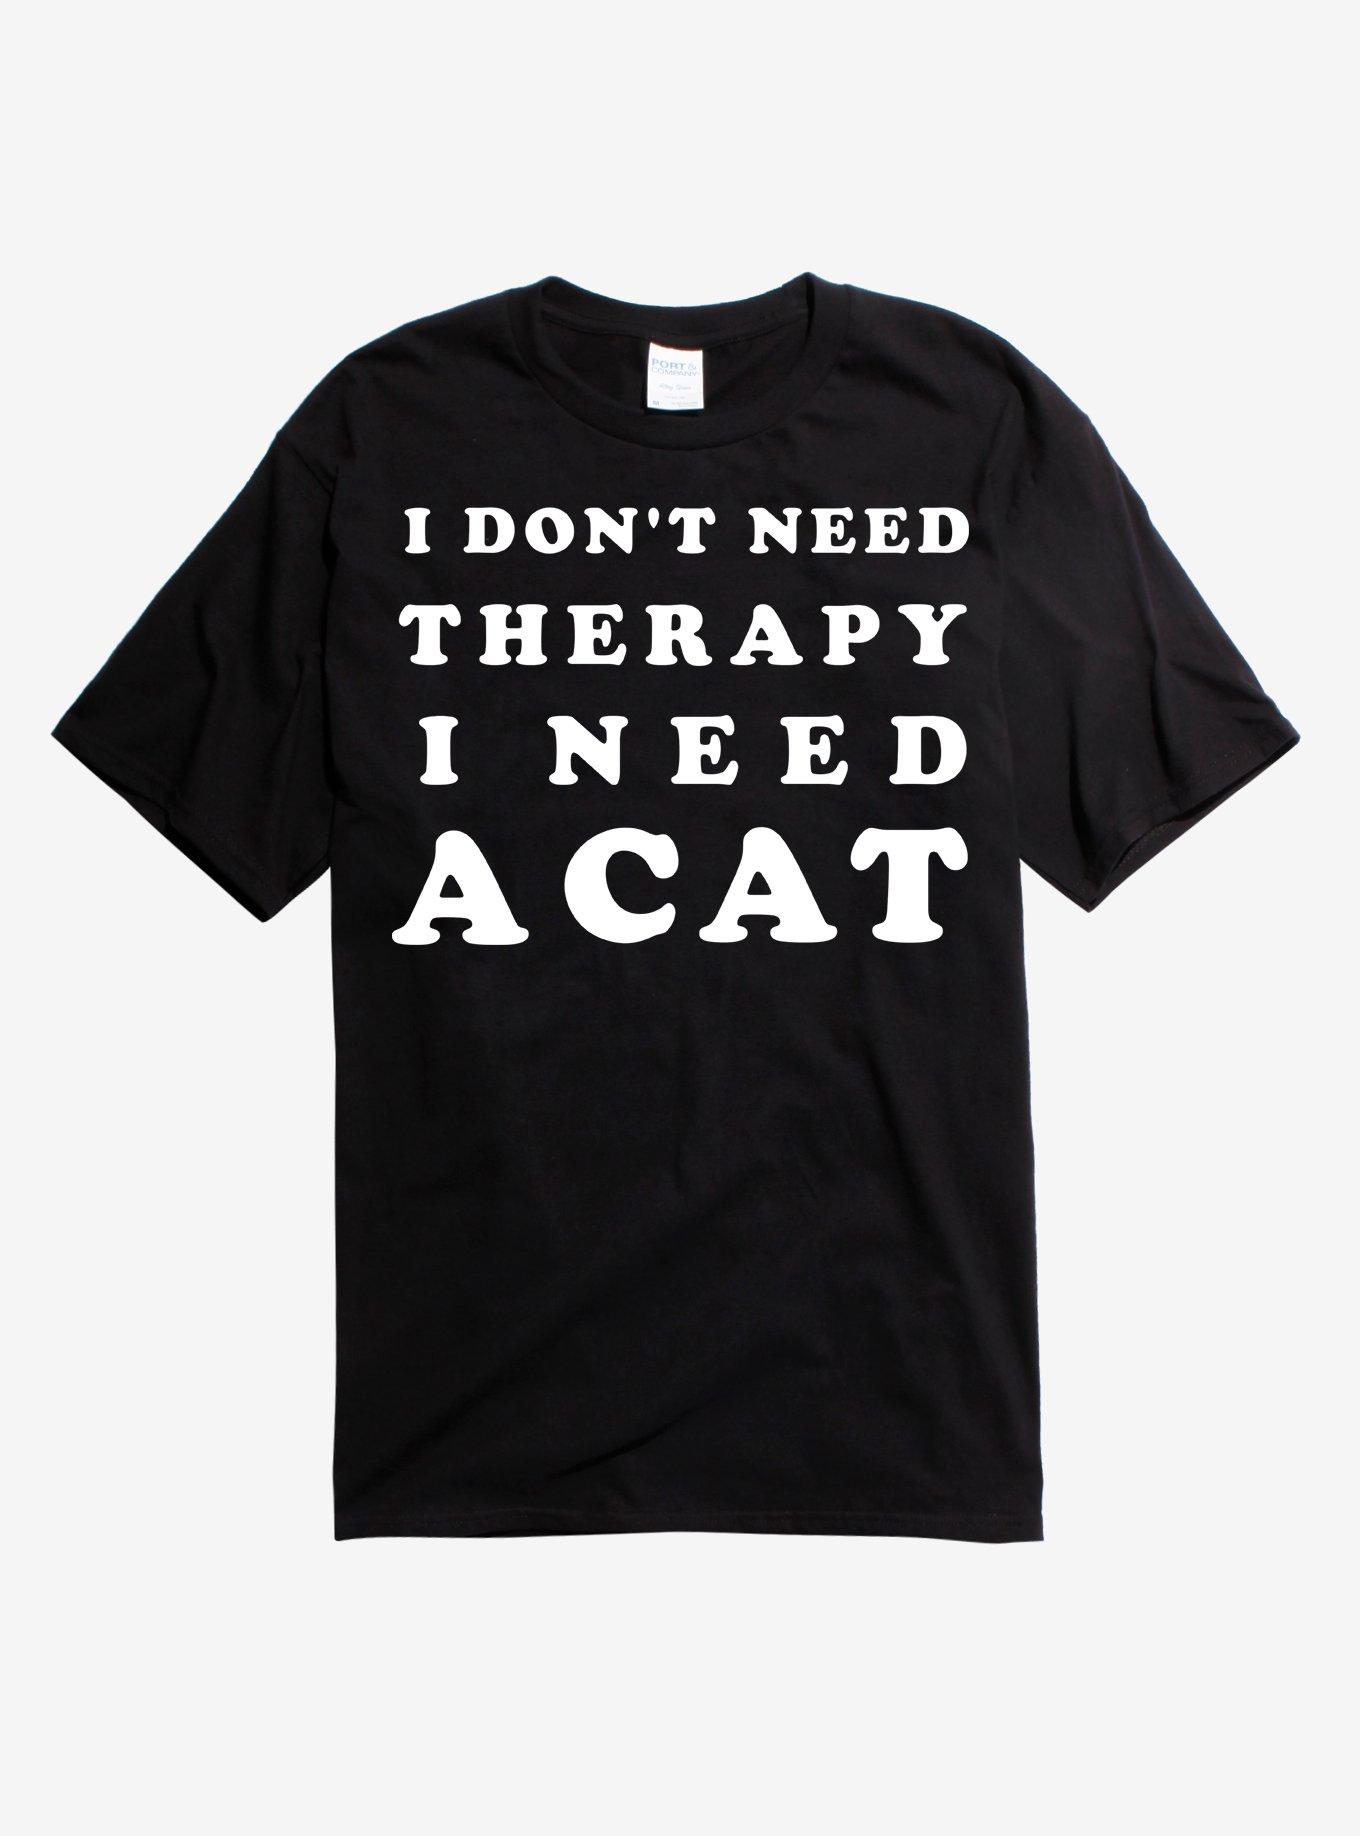 I Need A Cat T-Shirt